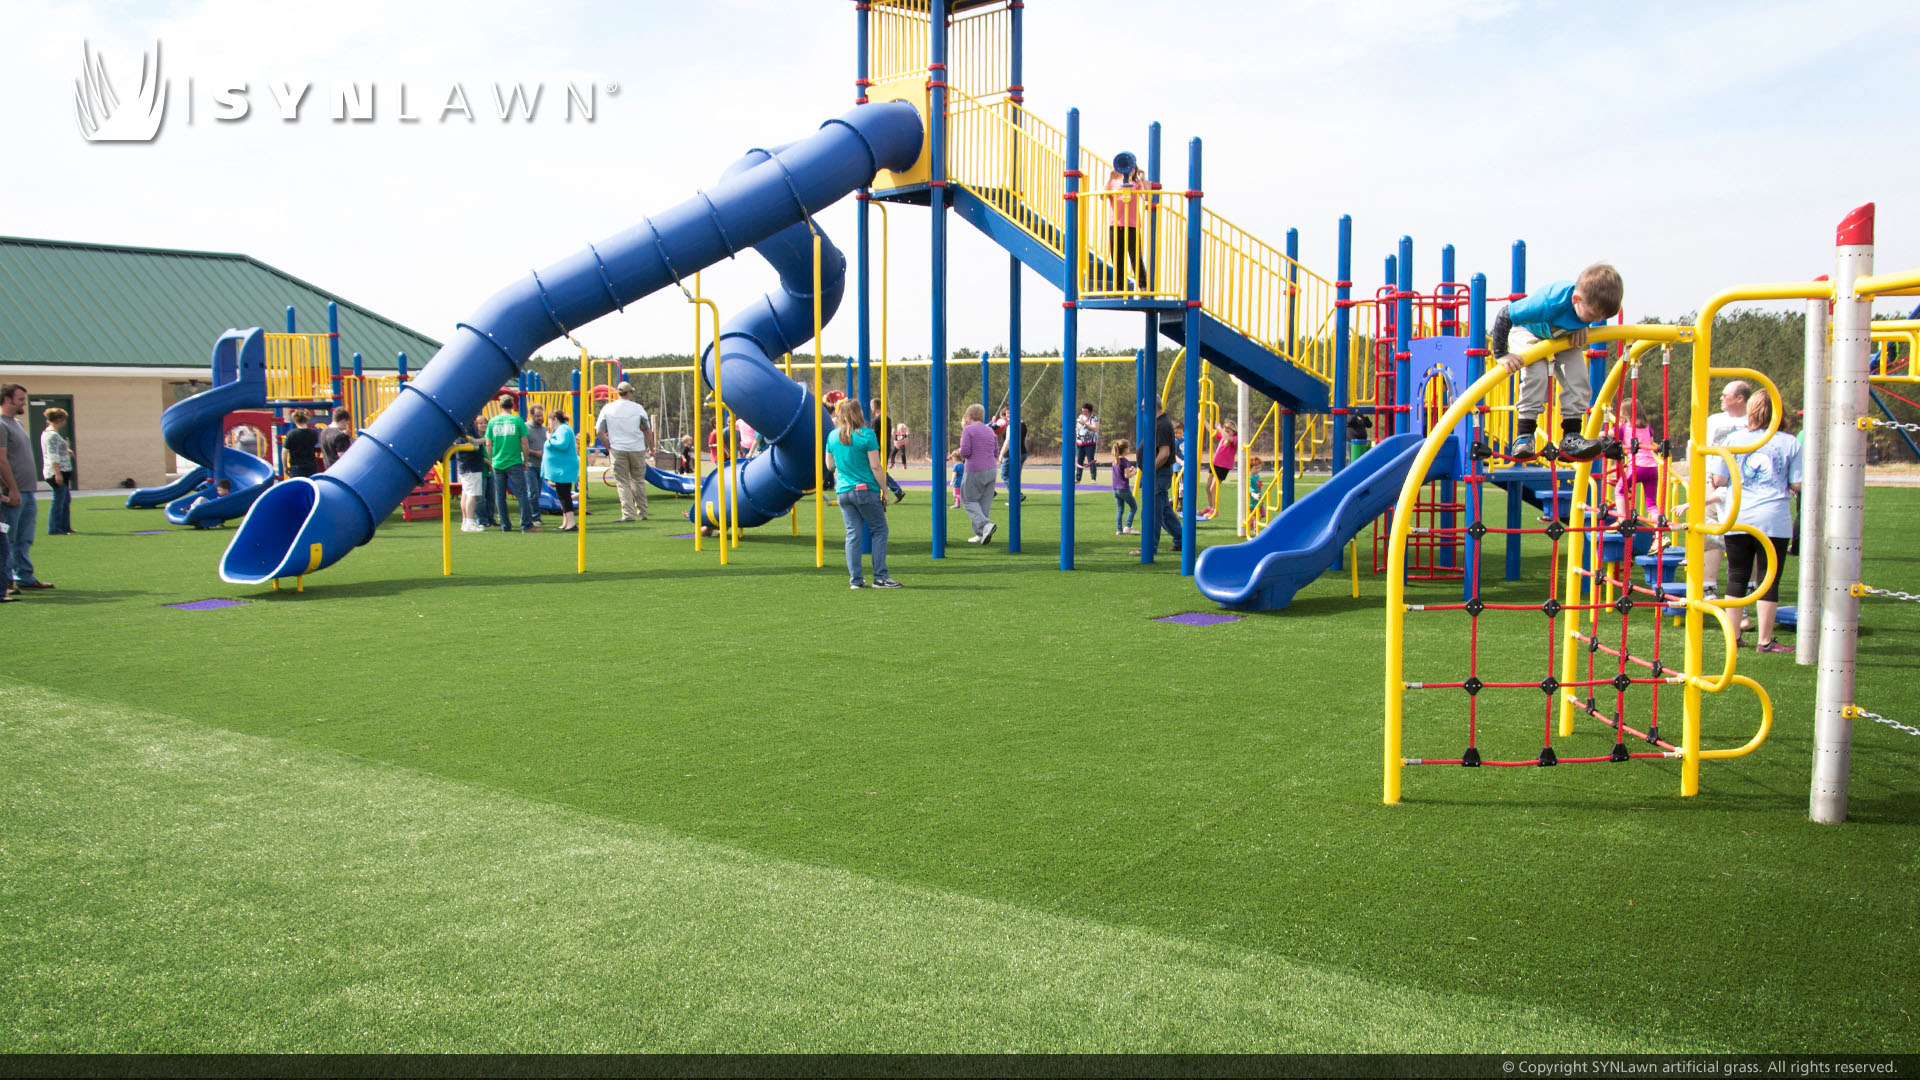 SYNLawn Playground & Park Installations - SYNLawn